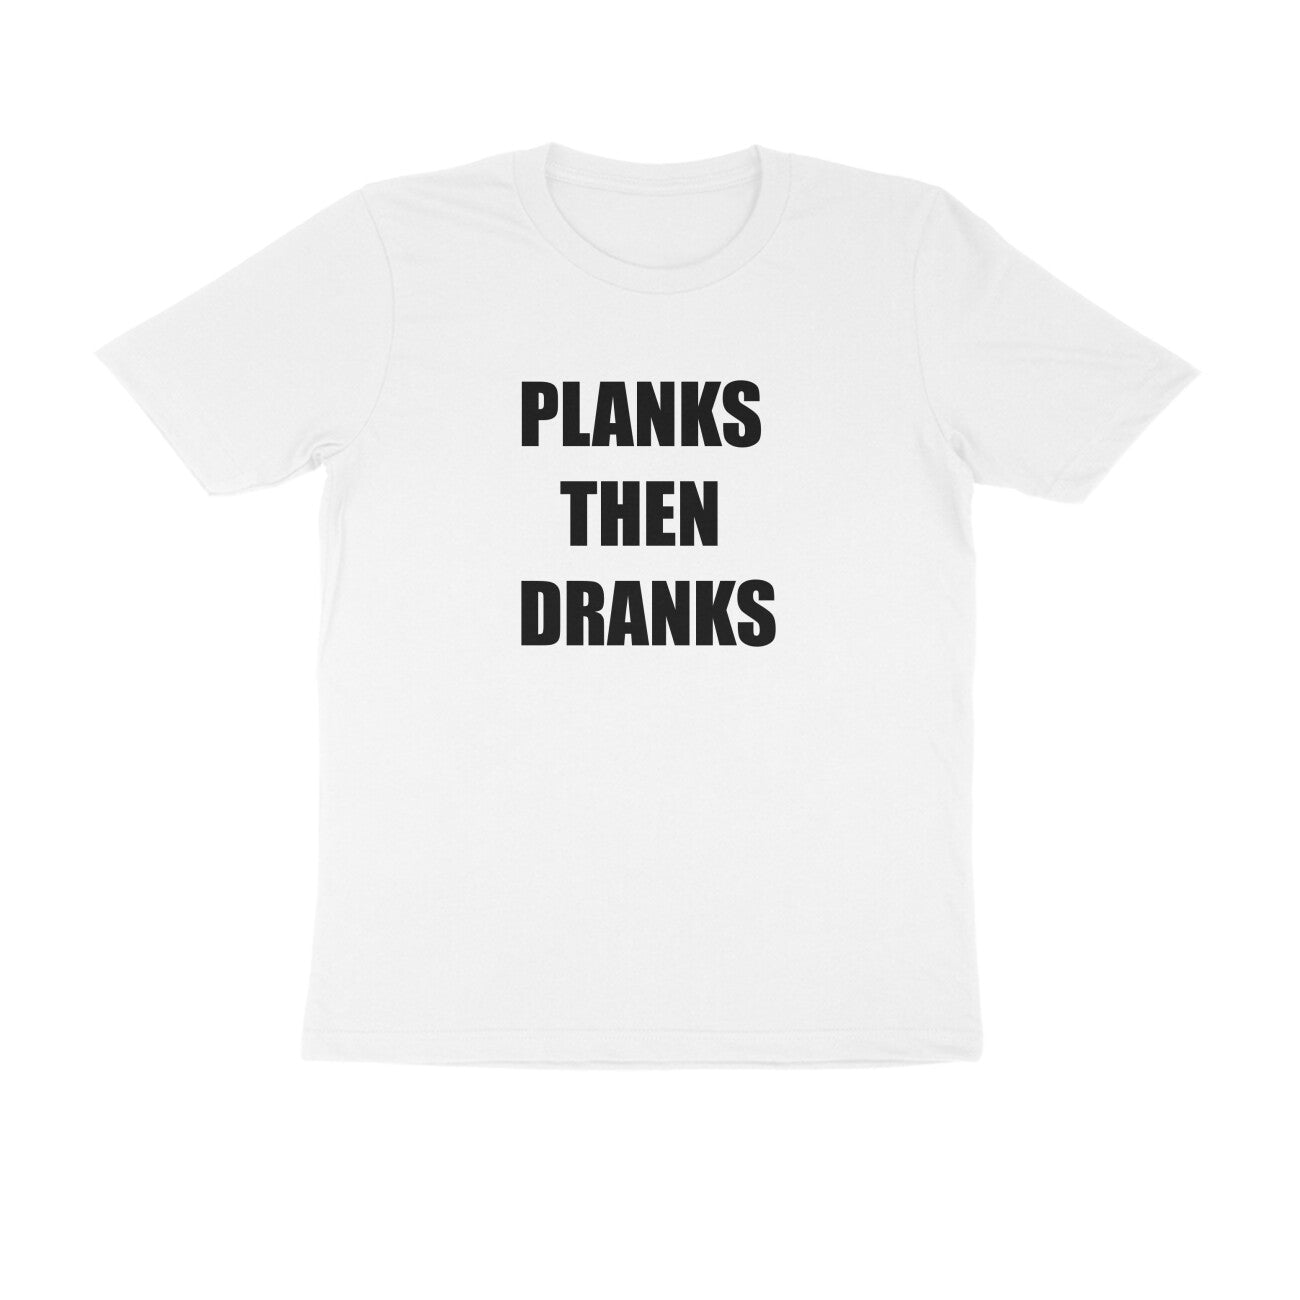 Planks then Dranks Workout T-shirt